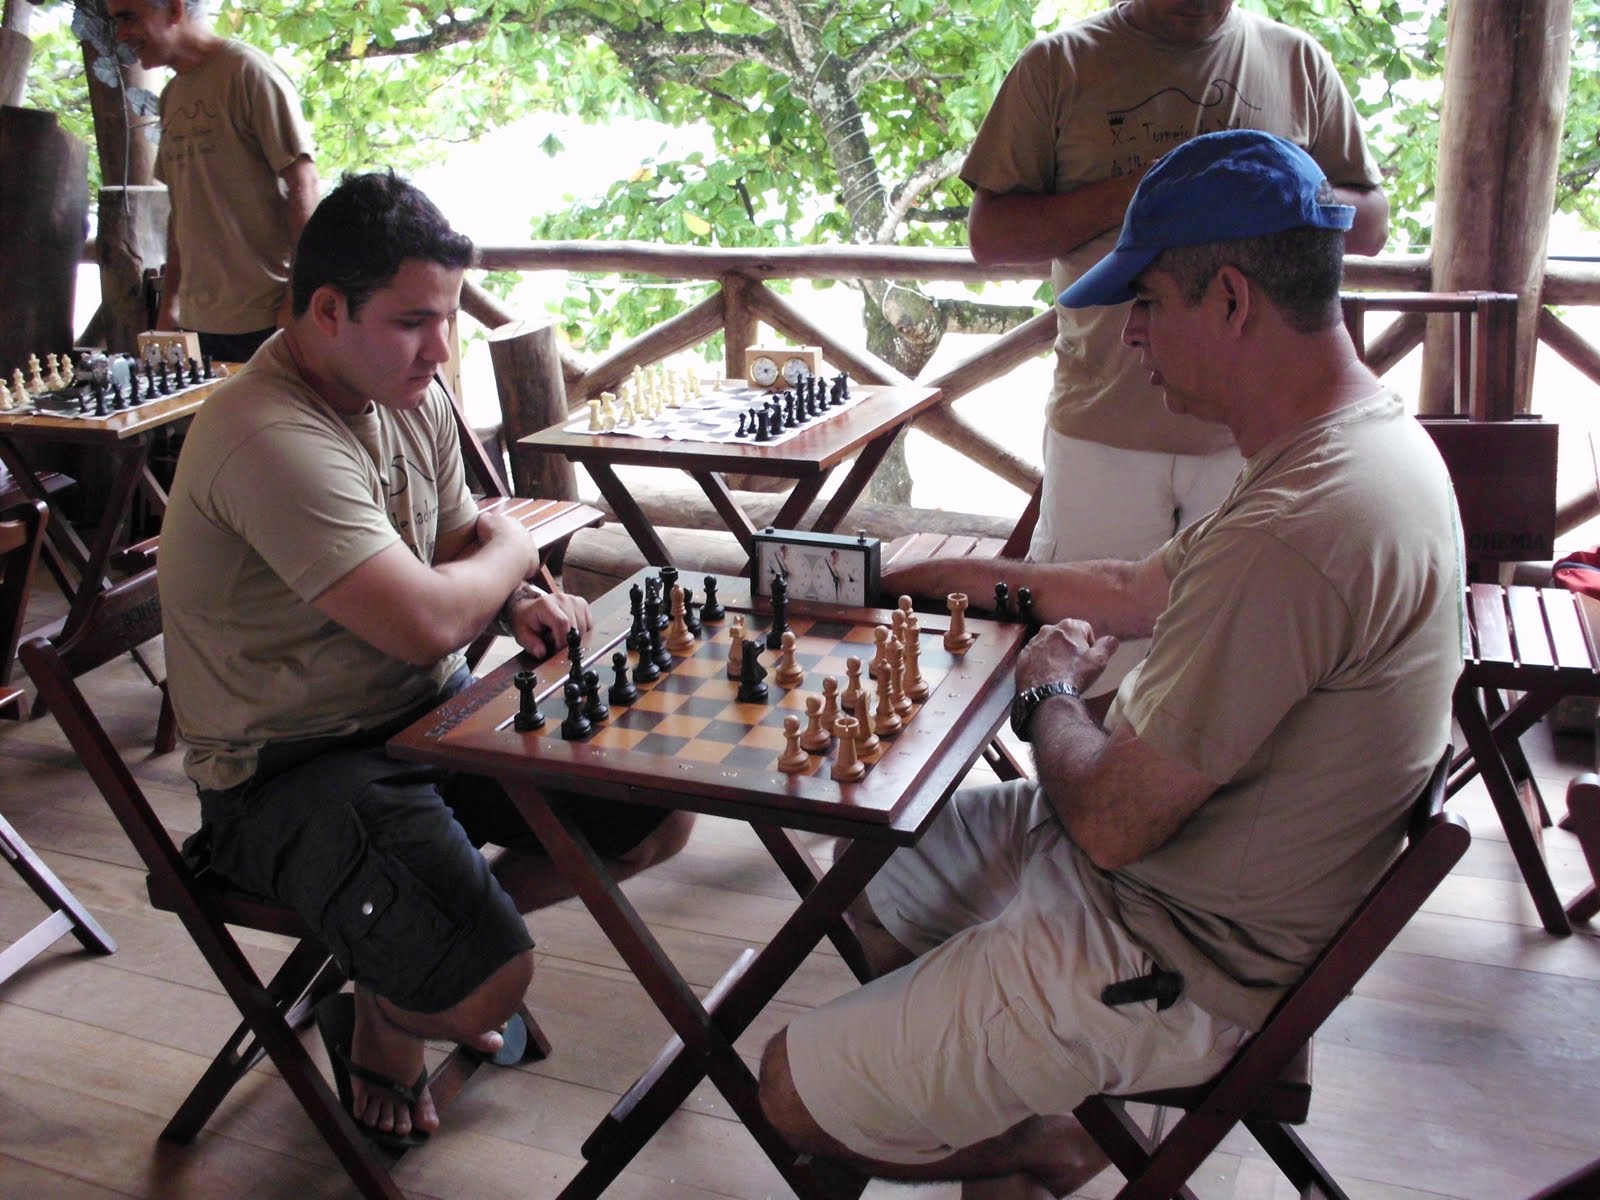 Xeque-Mate: Torneio Aberto de xadrez no mês de junho - AABB Porto